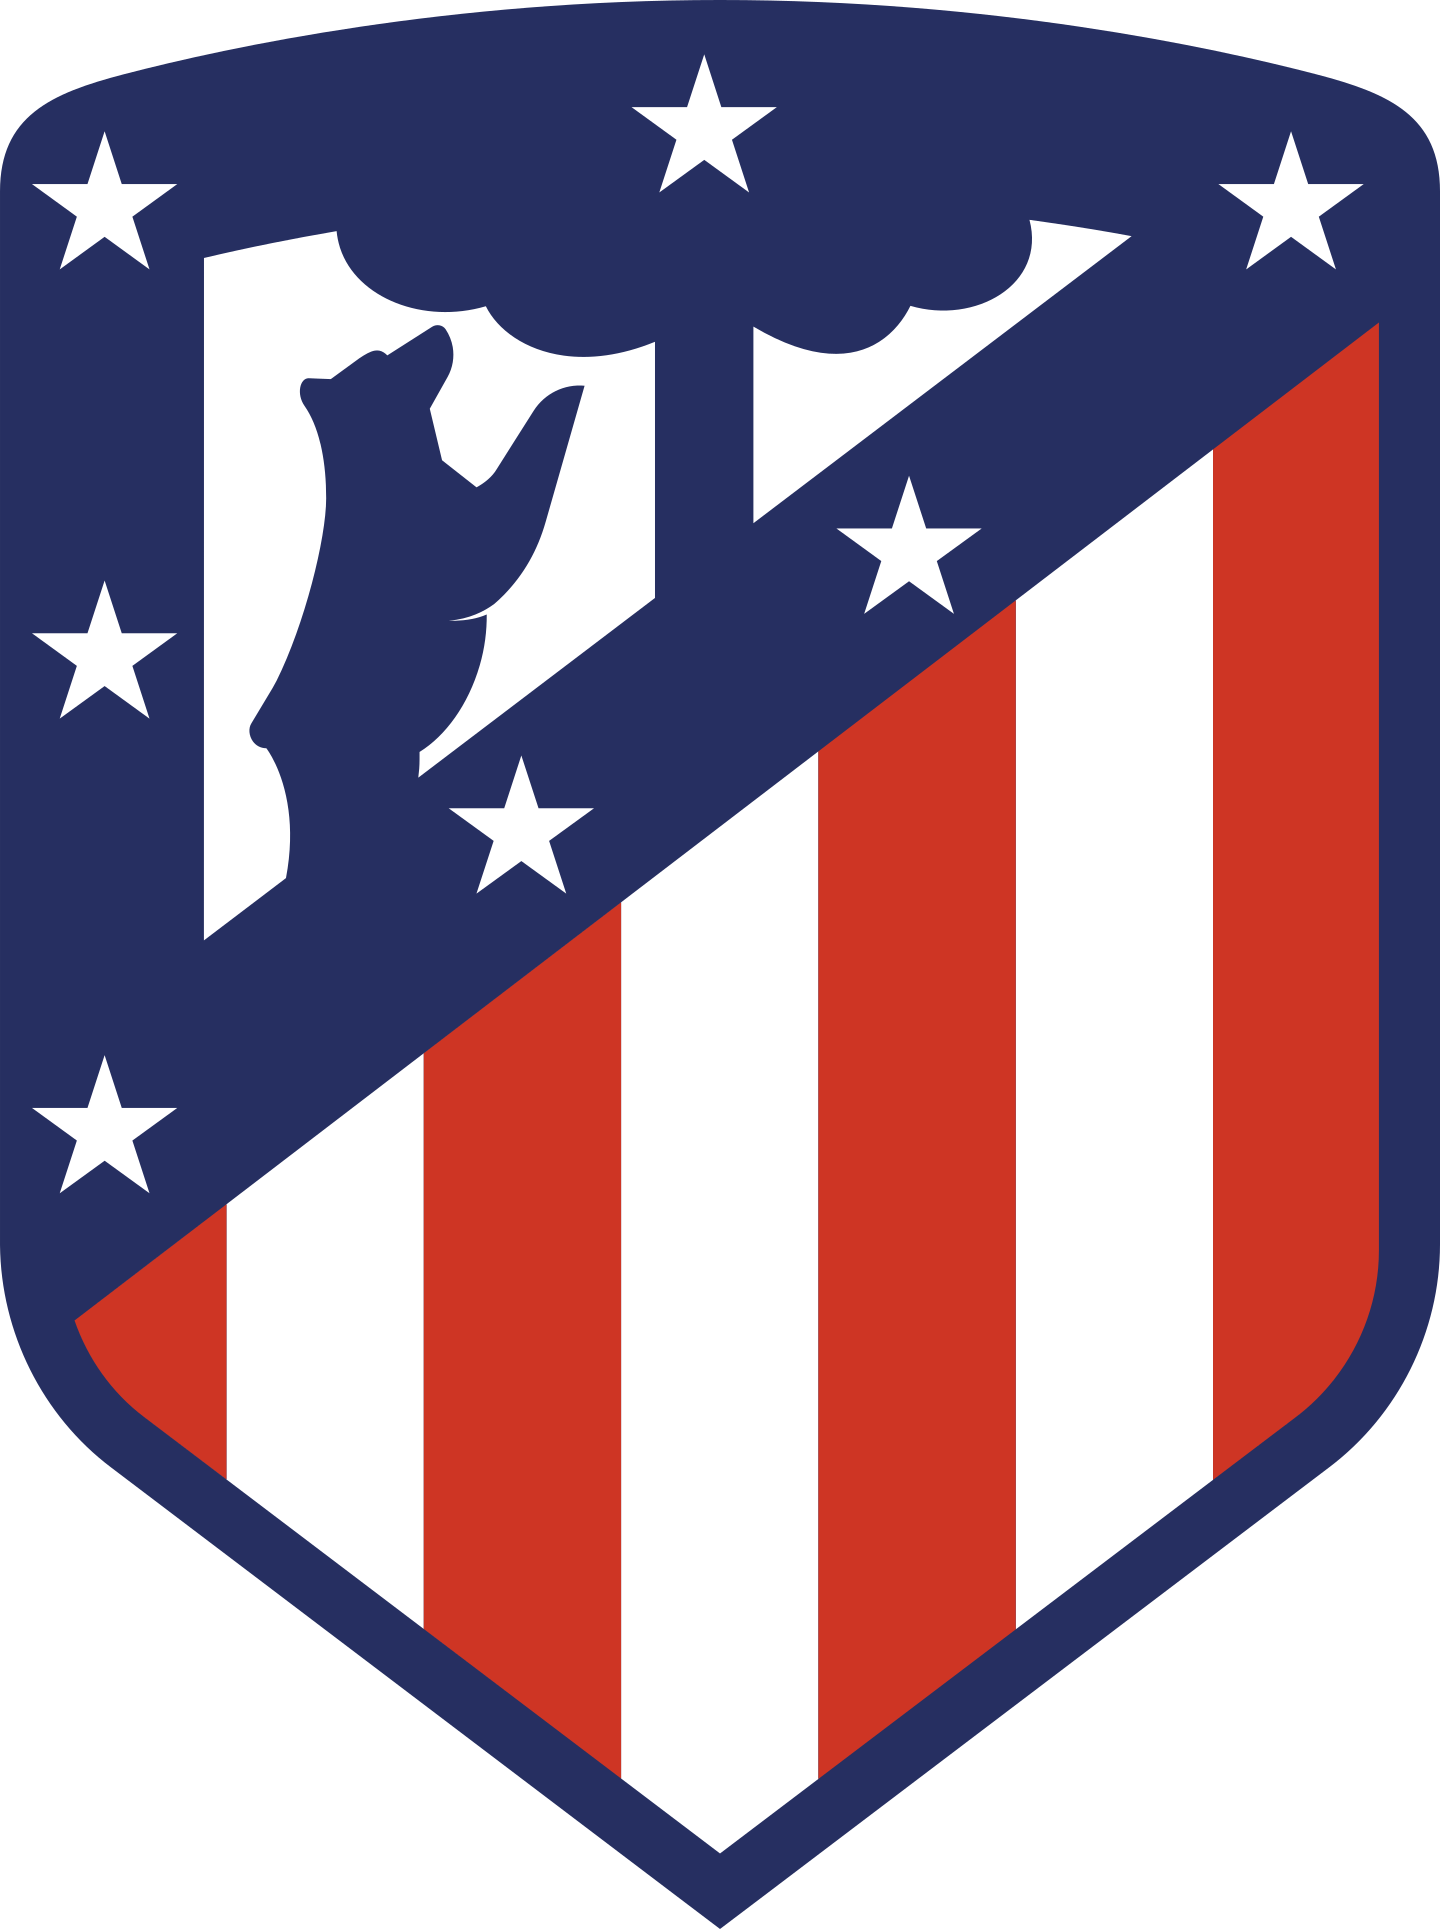 atletico madrid logo 2 1 - Club Atlético Madrid Logo